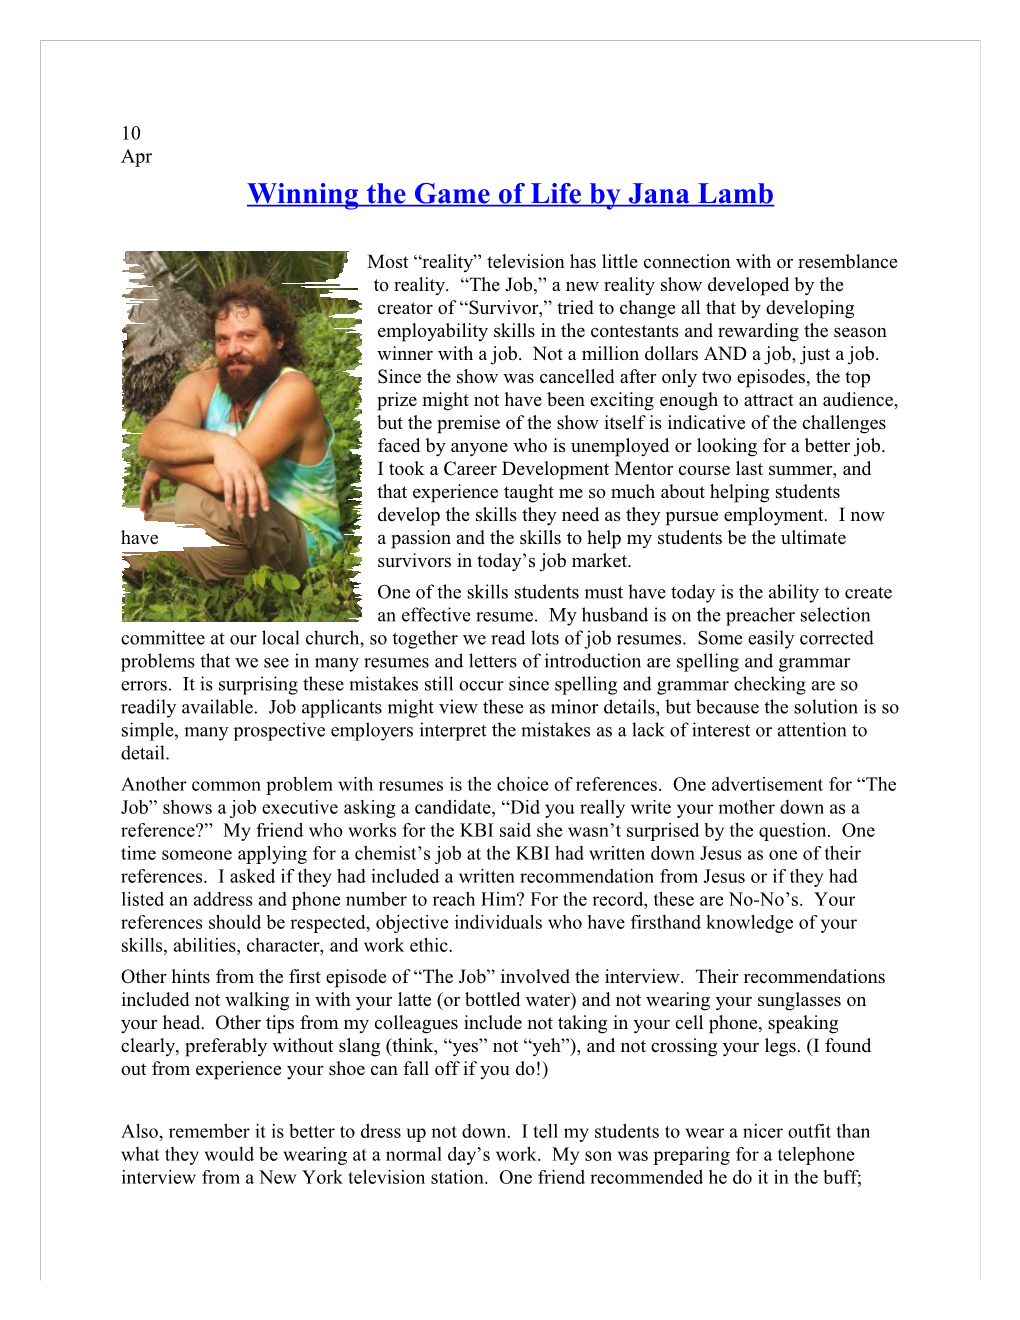 Winning the Game of Life by Jana Lamb